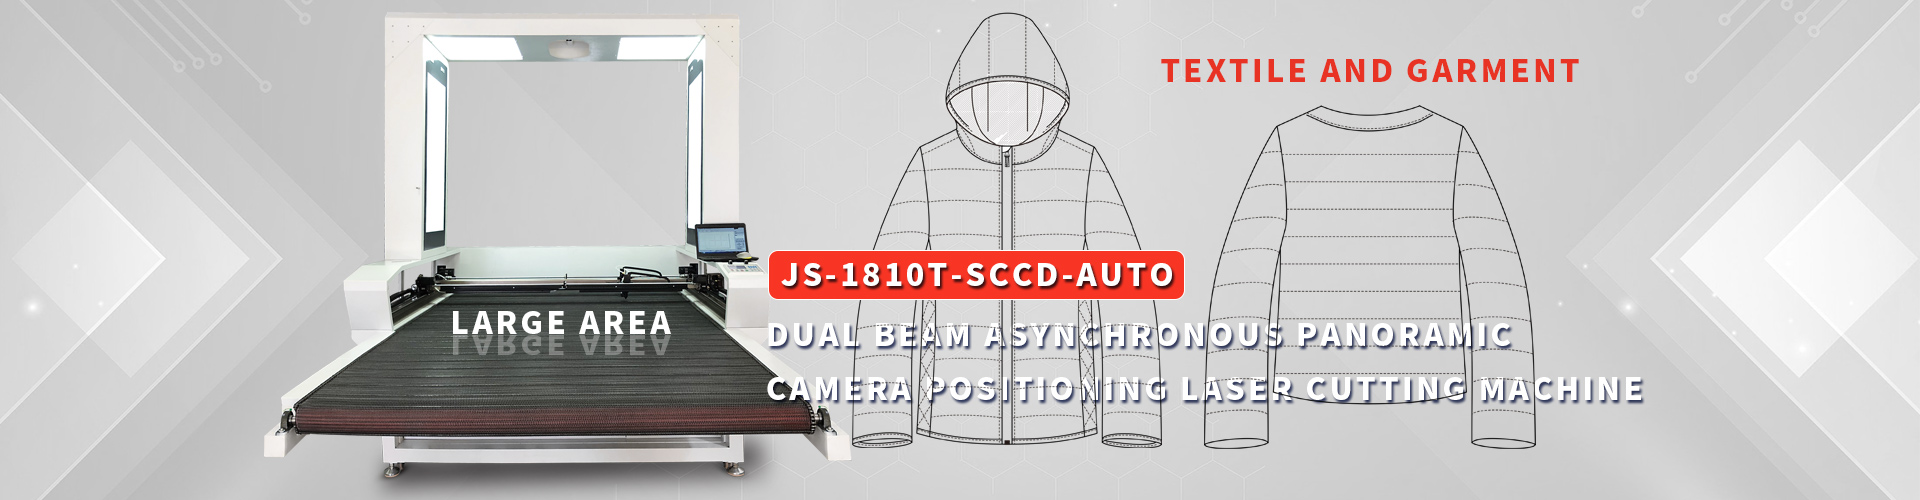 Dual beam asynchronous panoramic camera positioning laser cutting machine